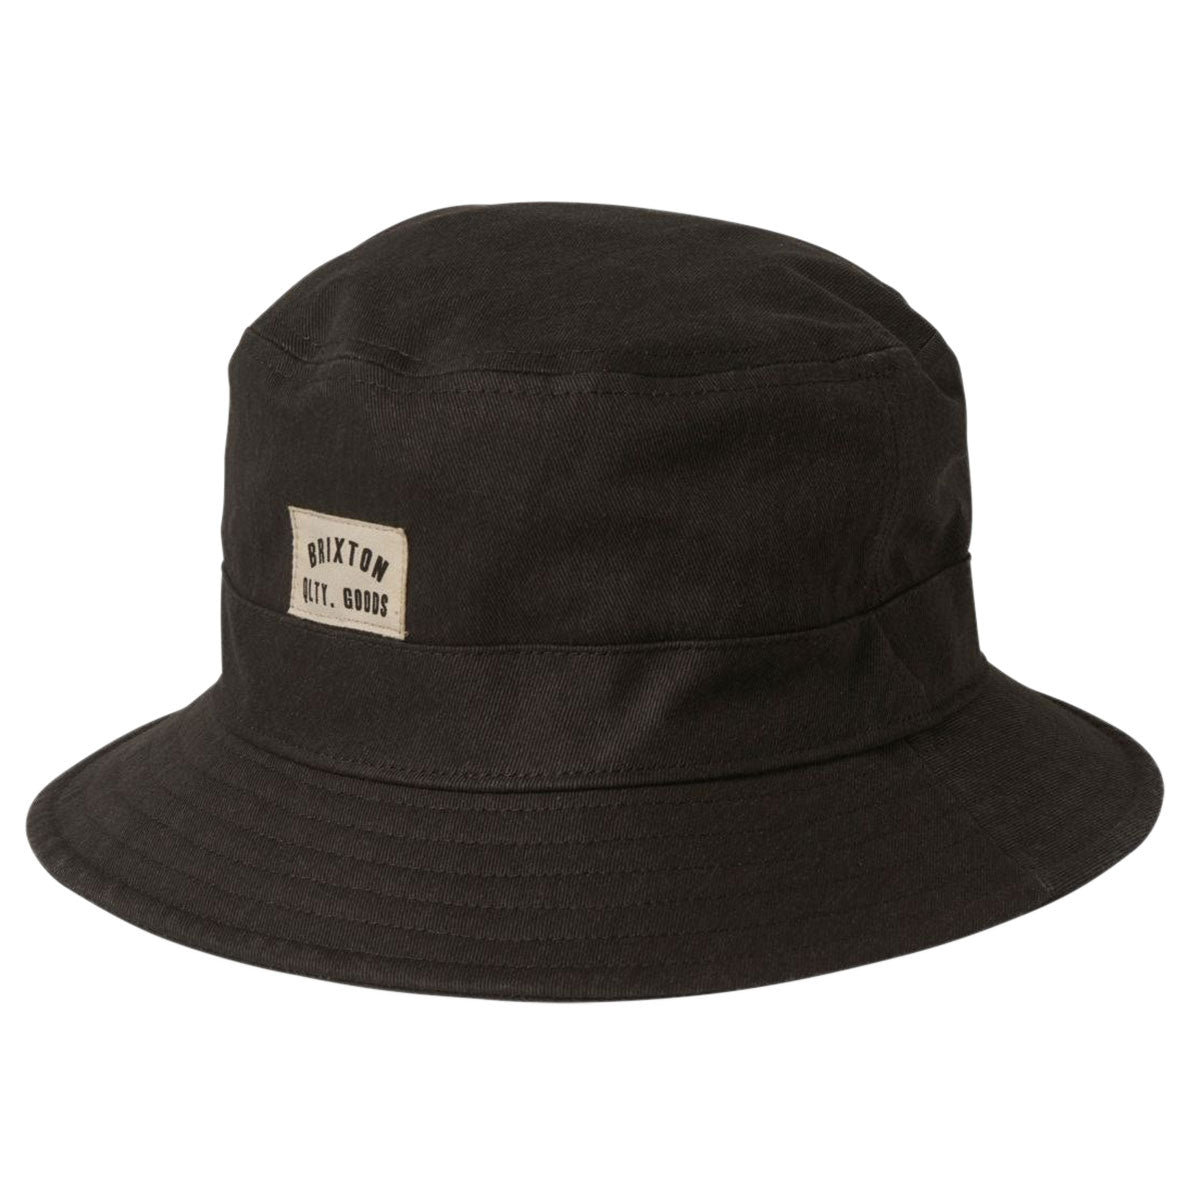 Brixton Woodburn Packable Bucket Hat - Black Sol Wash image 1